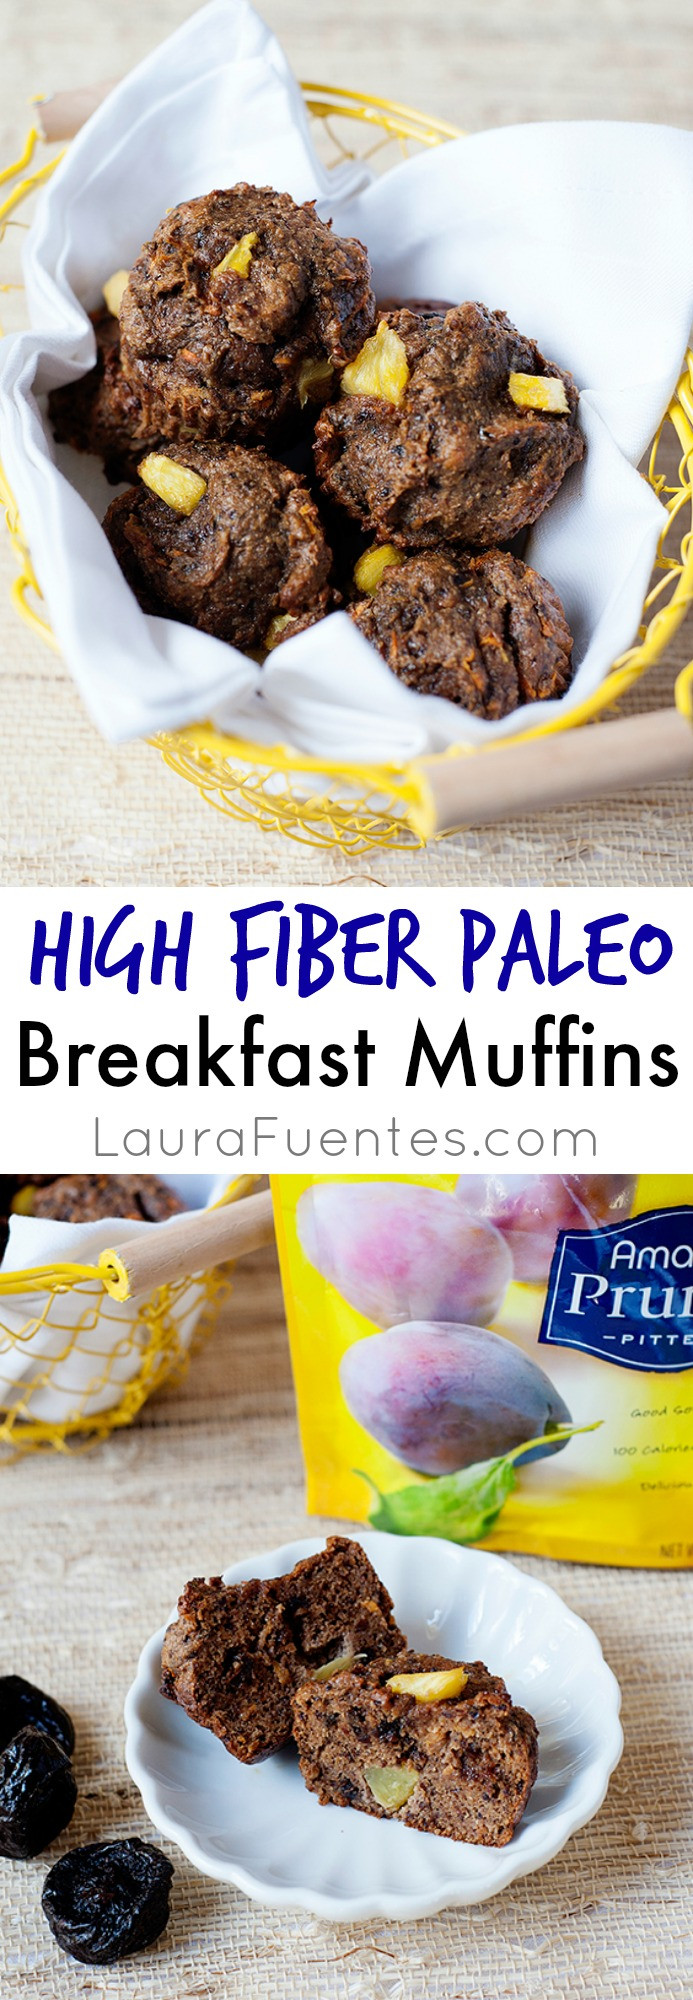 High Fiber Breakfast Recipes
 High Fiber Paleo Breakfast Muffins